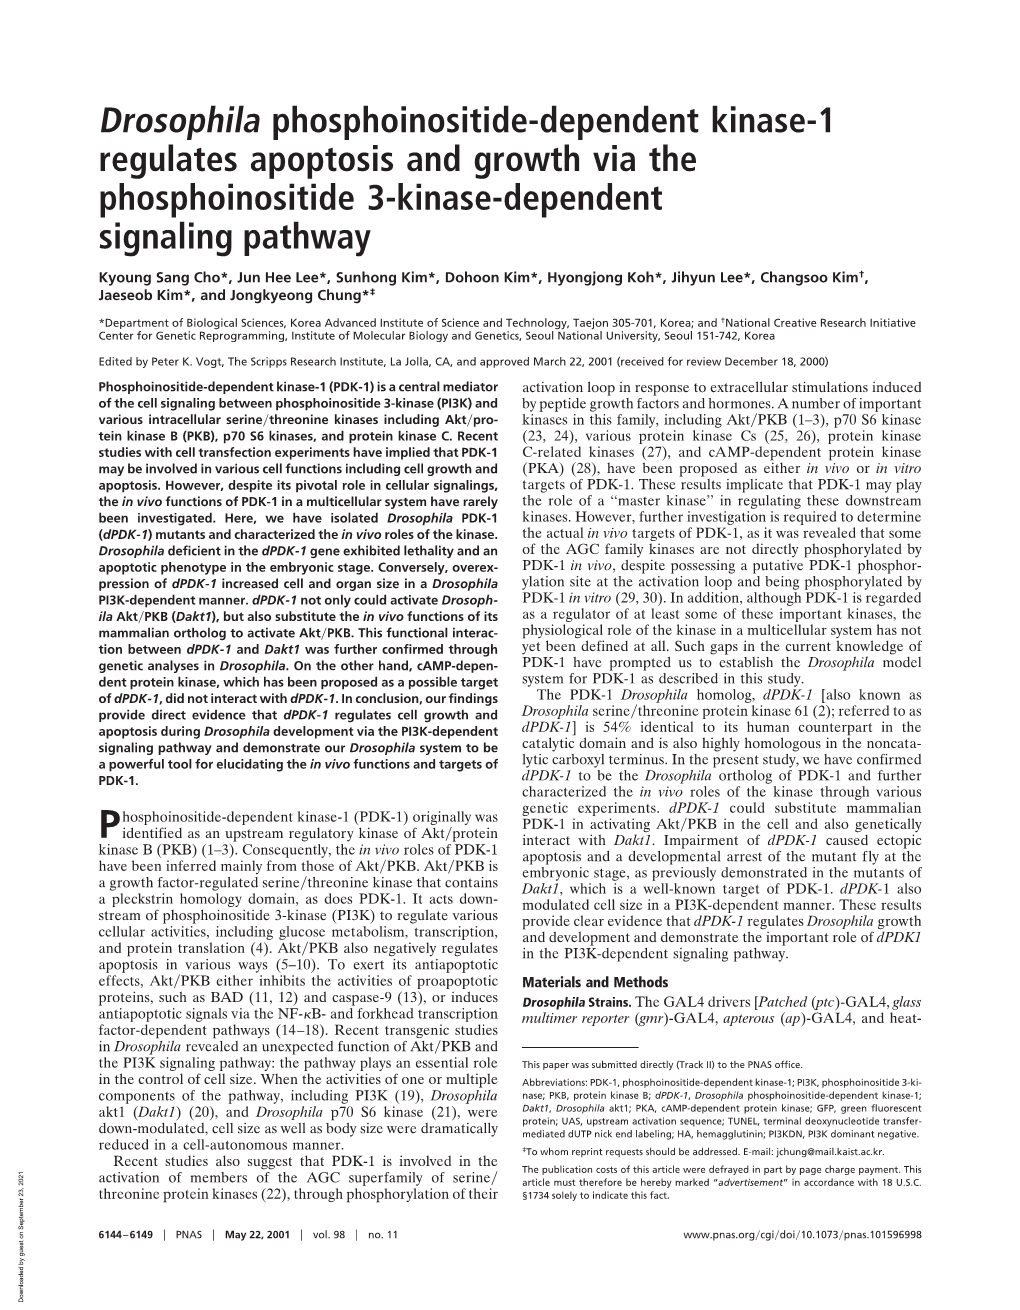 Drosophila Phosphoinositide-Dependent Kinase-1 Regulates Apoptosis and Growth Via the Phosphoinositide 3-Kinase-Dependent Signaling Pathway